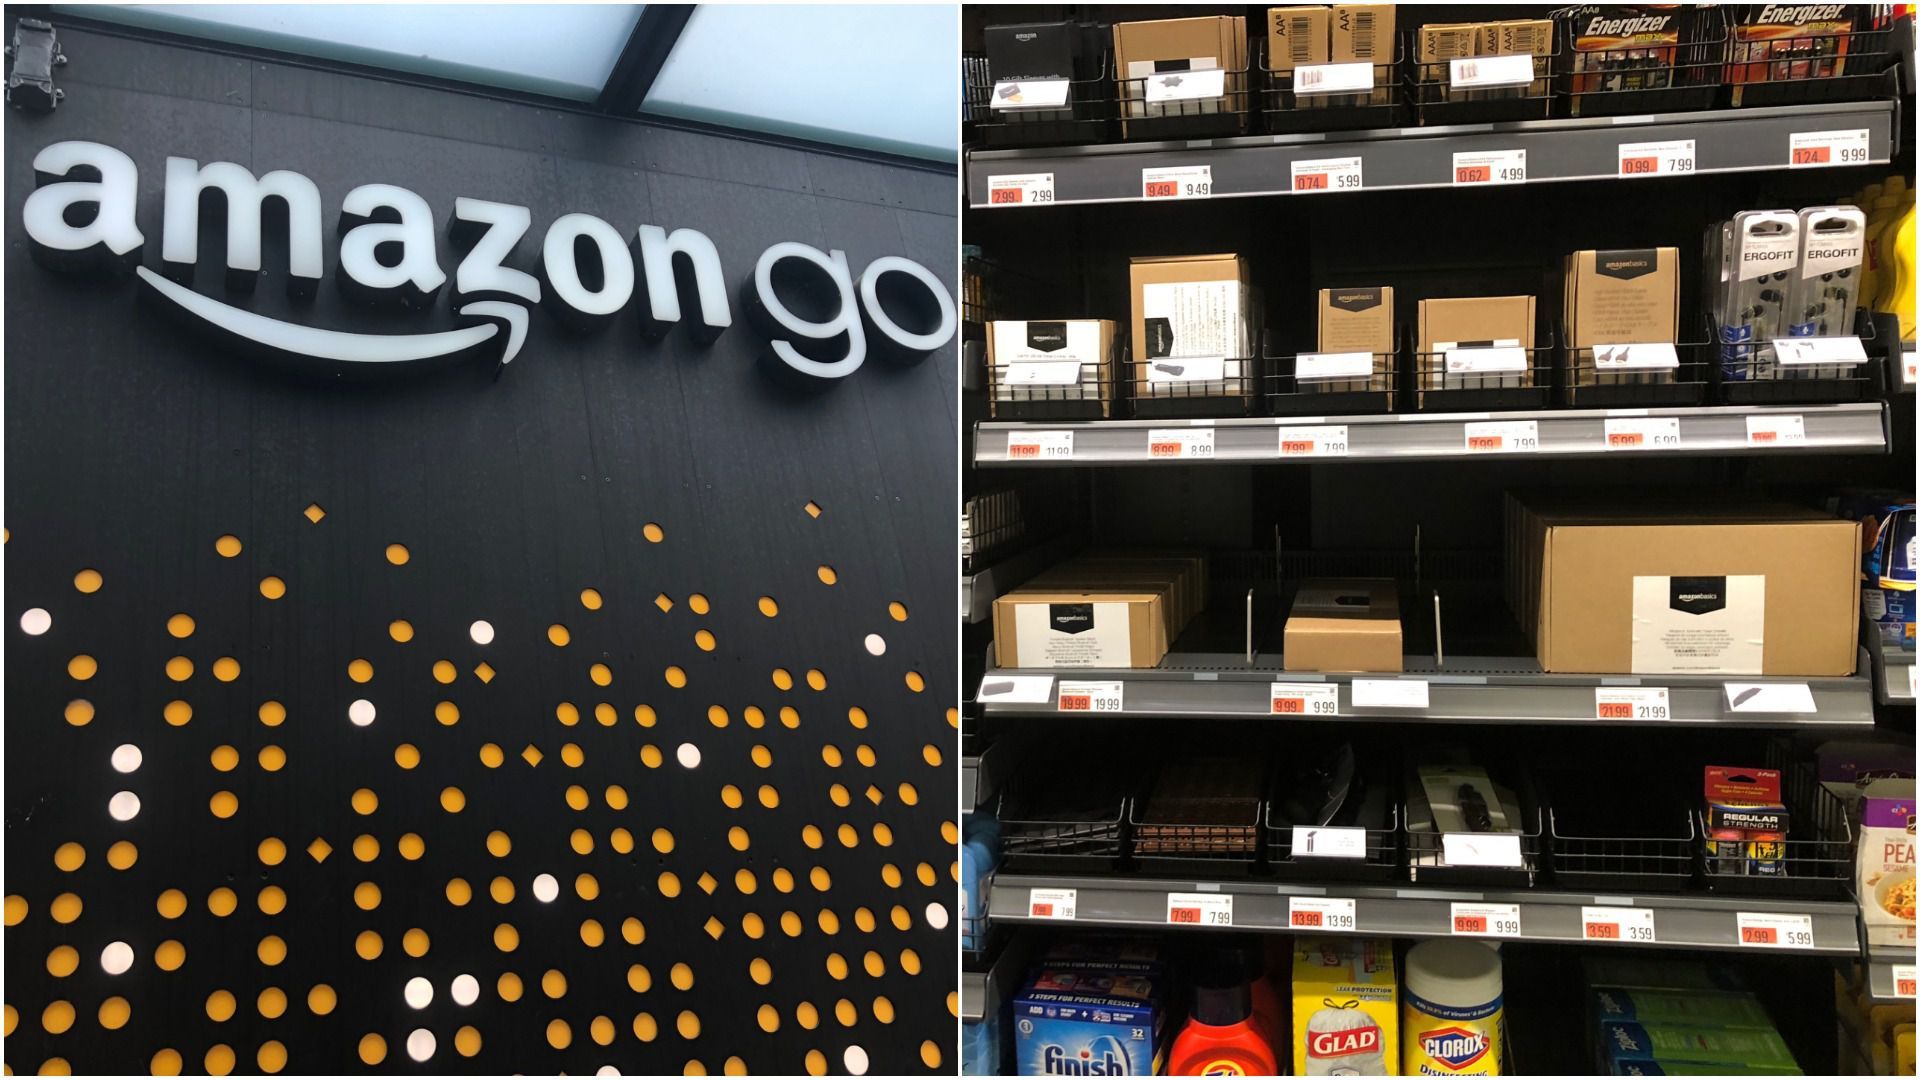 Photos of an Amazon Go sign and shelves inside a Go store